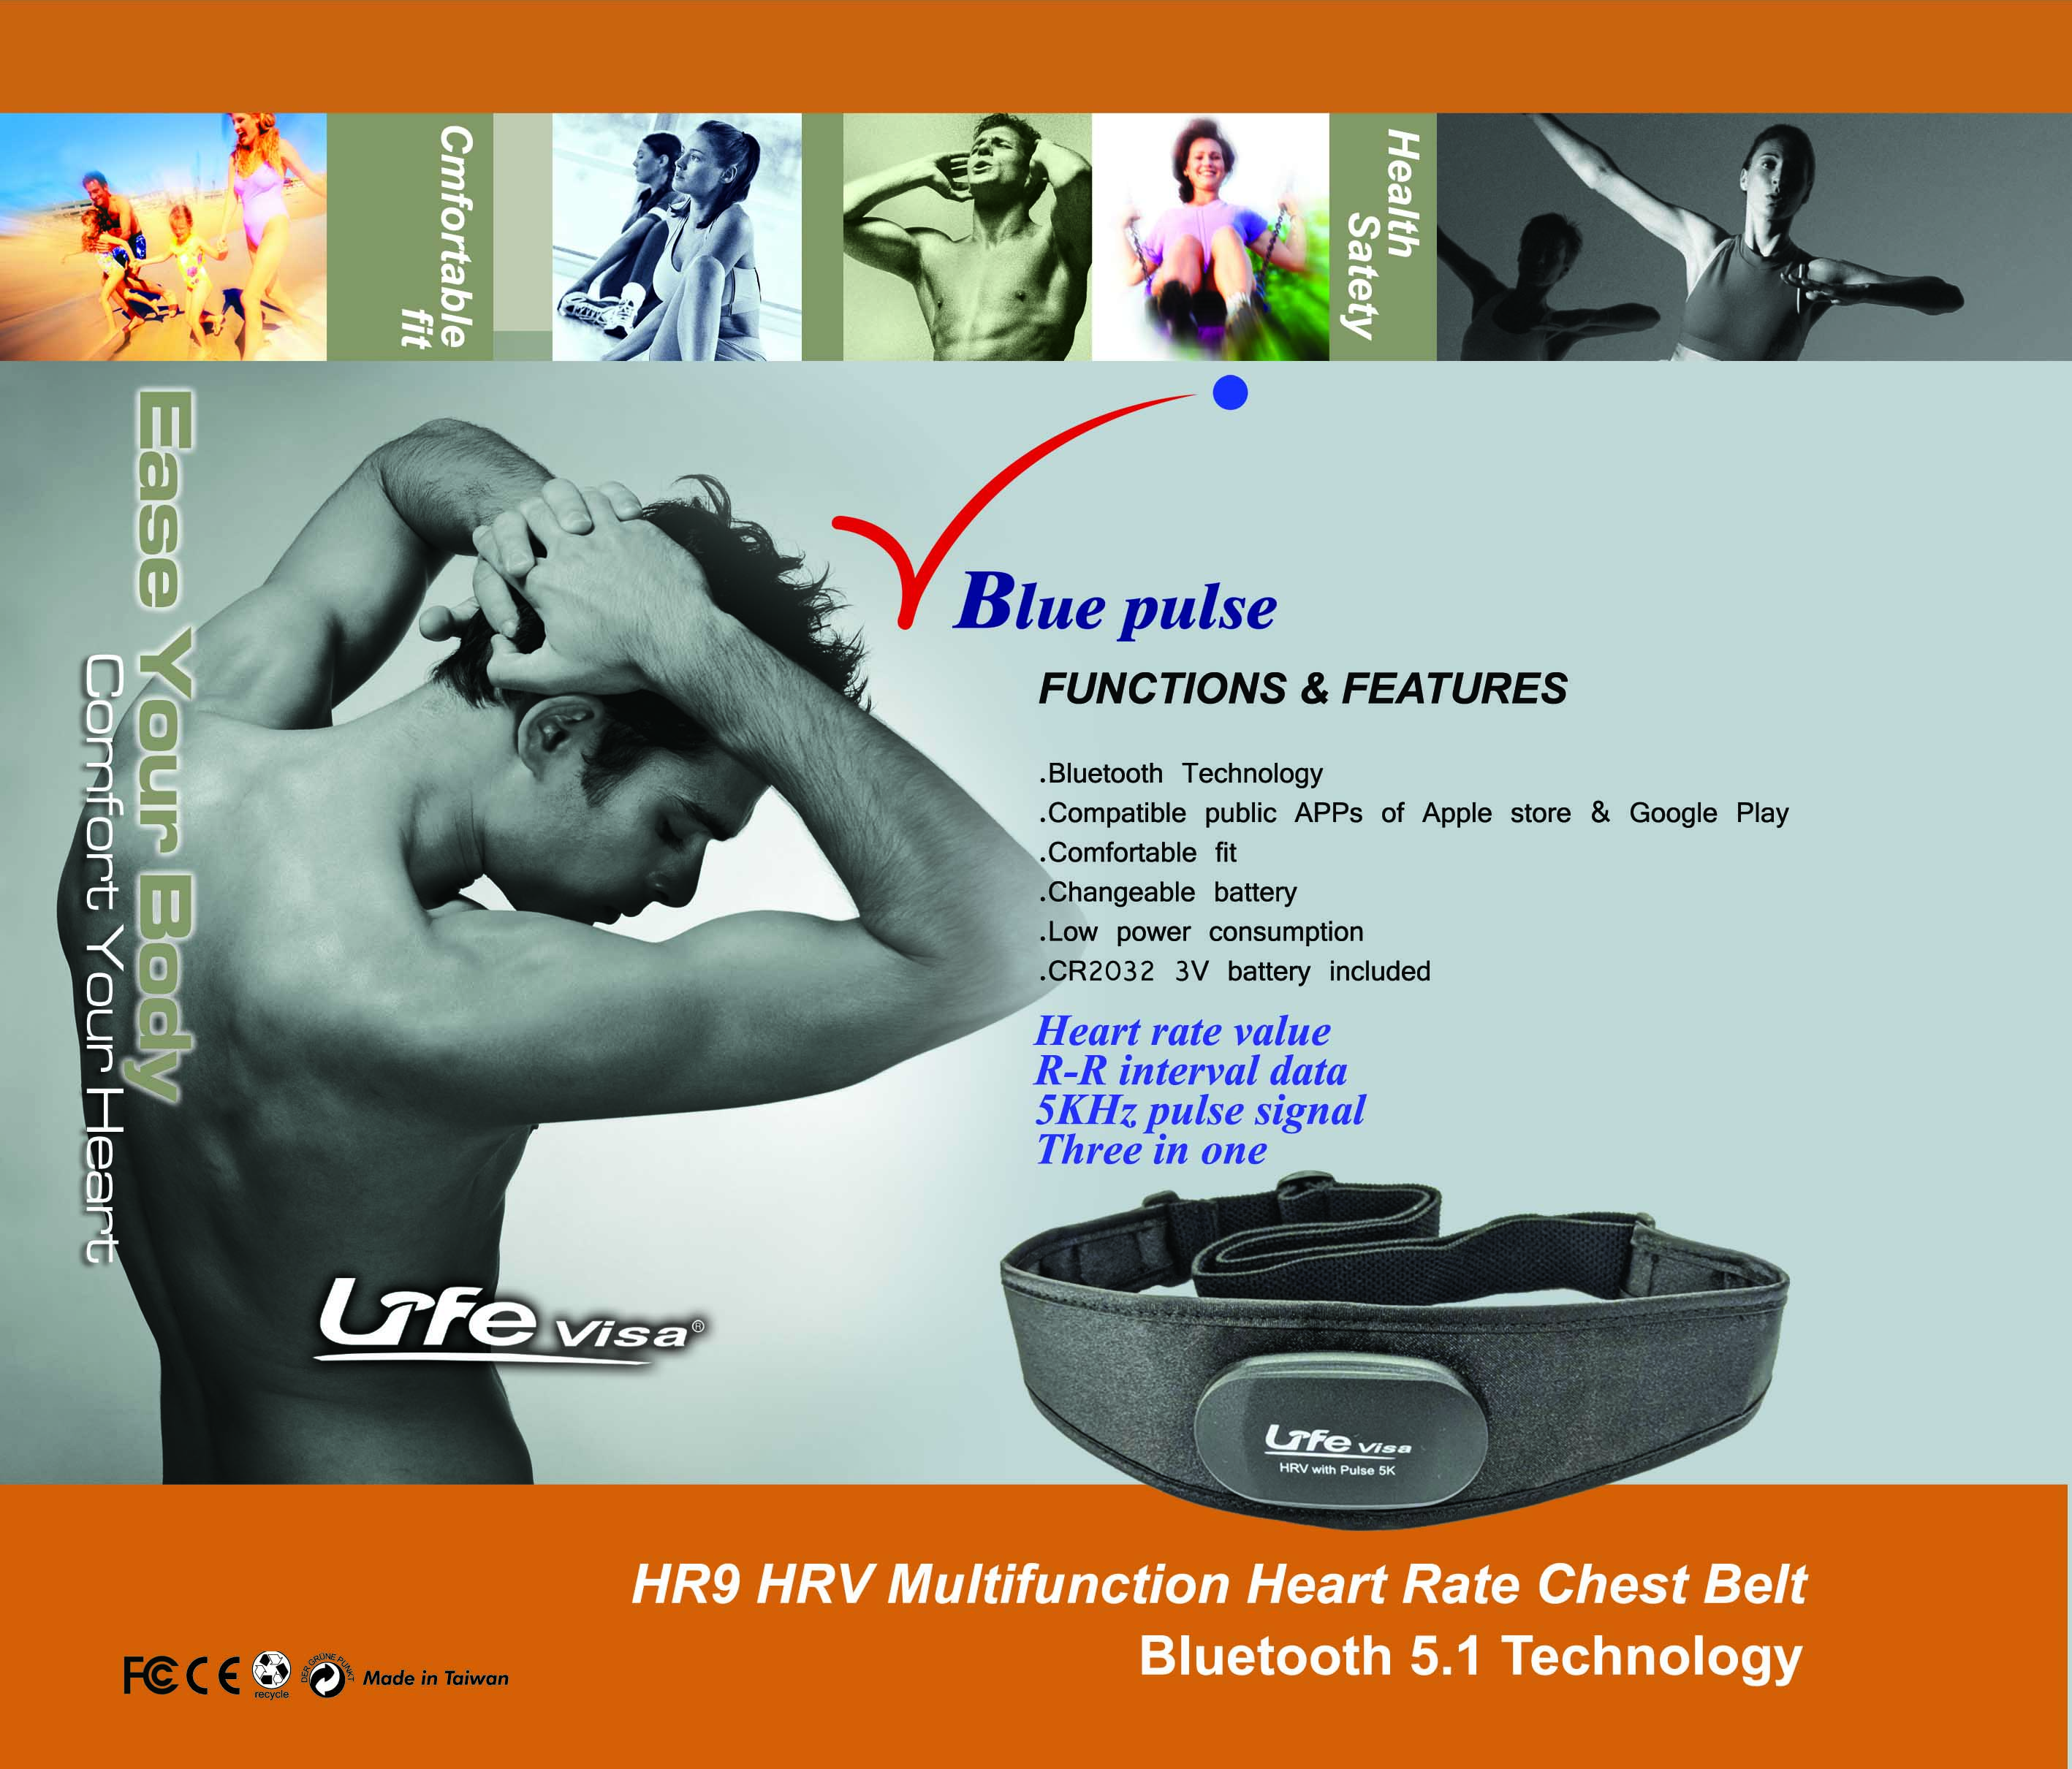 heart rate monitor,heart rate monitor,Bluetooth heart rate chest strap, 5.3KHz heart rate monitor,three in one three function heart rate strap, heart rate monitor,G.PULSE 3 in 1,3 in 1 heart rate,three mode heart rate monitor,Biotronic pulse,Lifevisa,lifevisa,Taiwan Biotronic